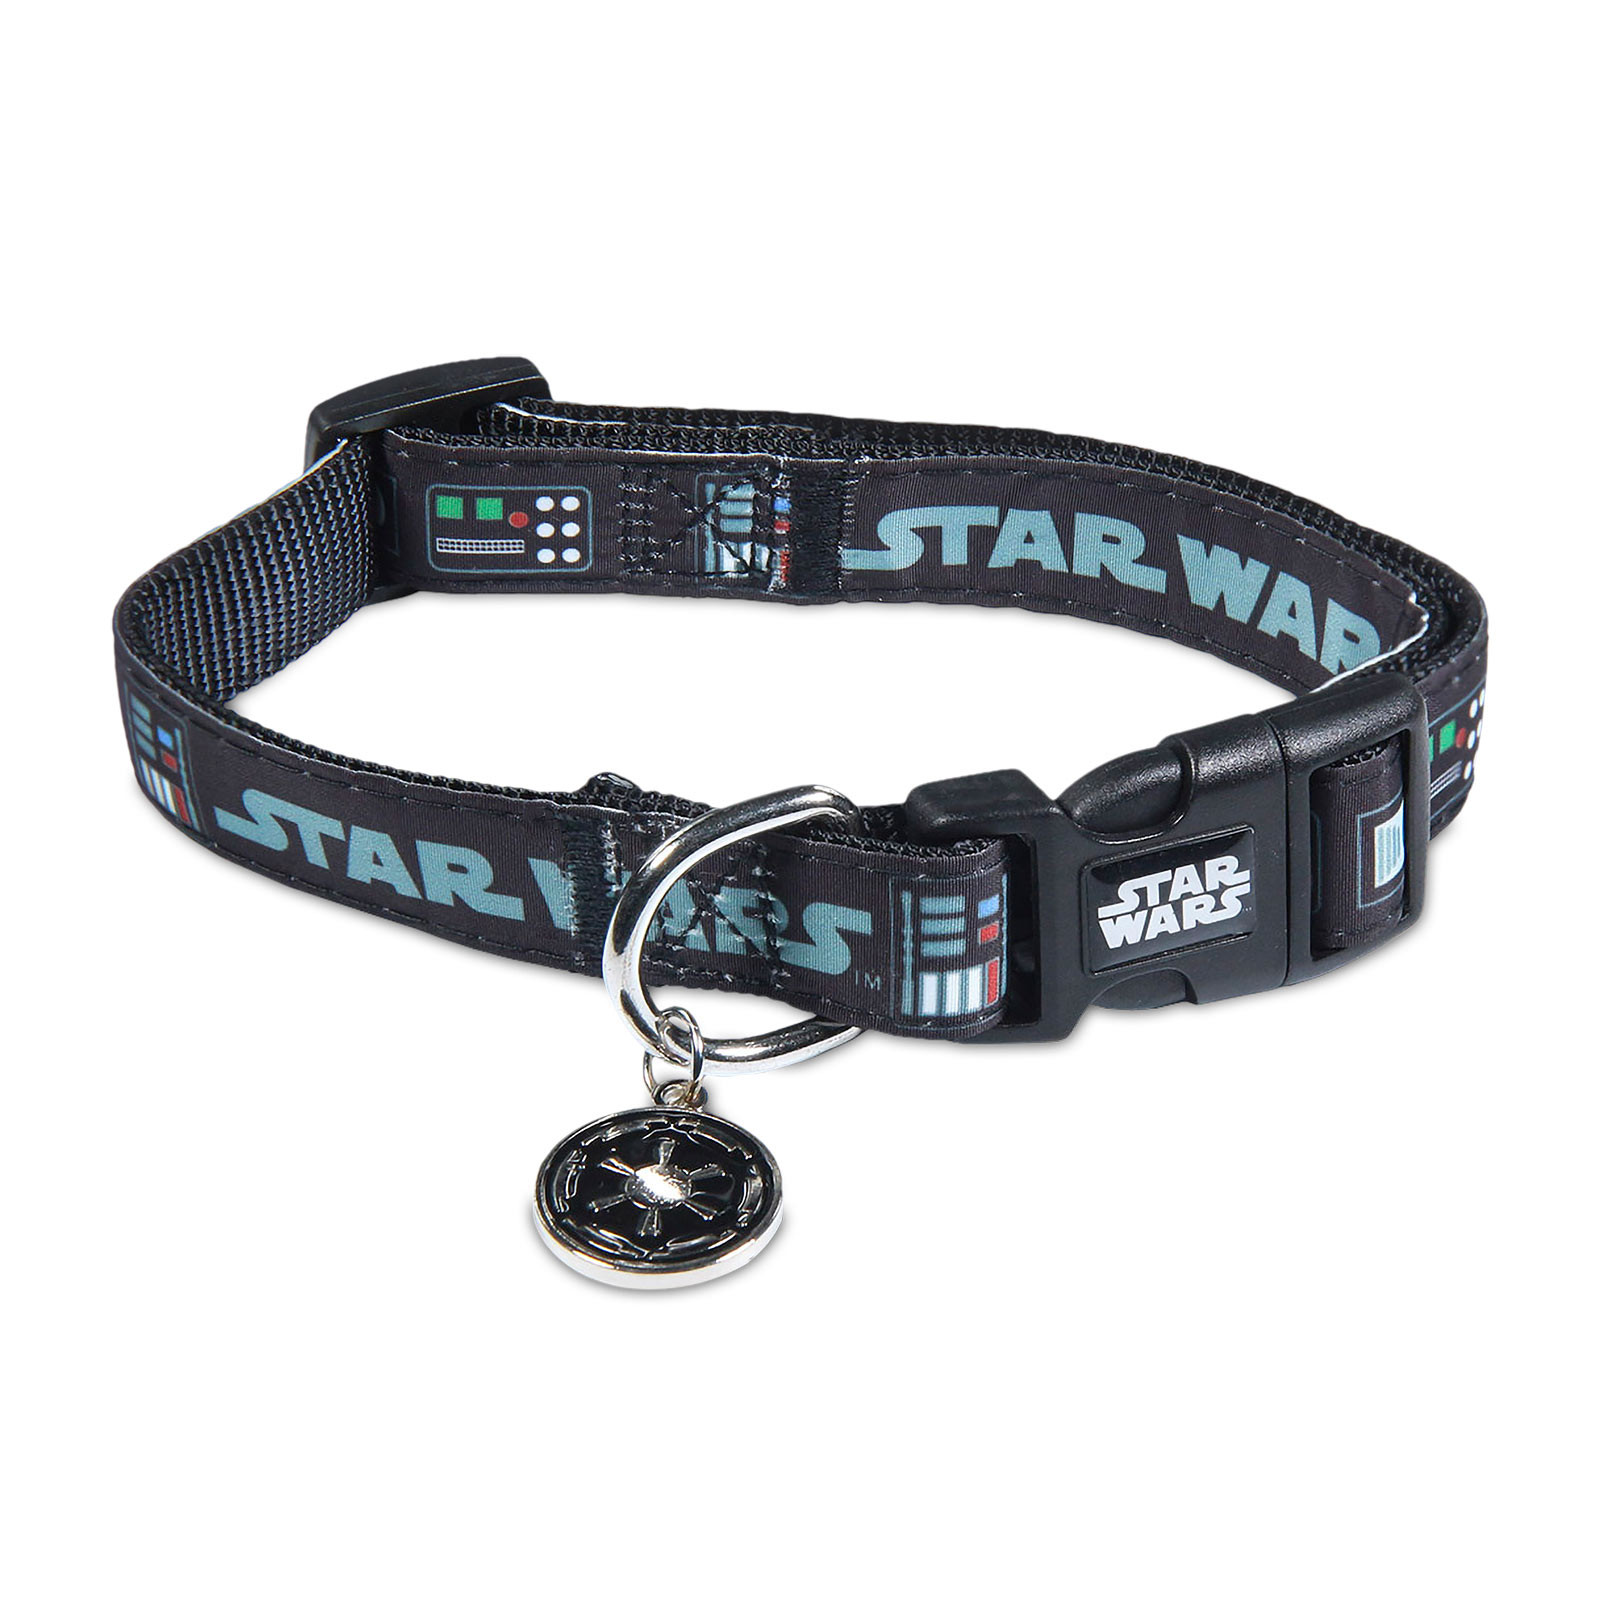 Star Wars - Darth Vader Click-Collar for Dogs Black